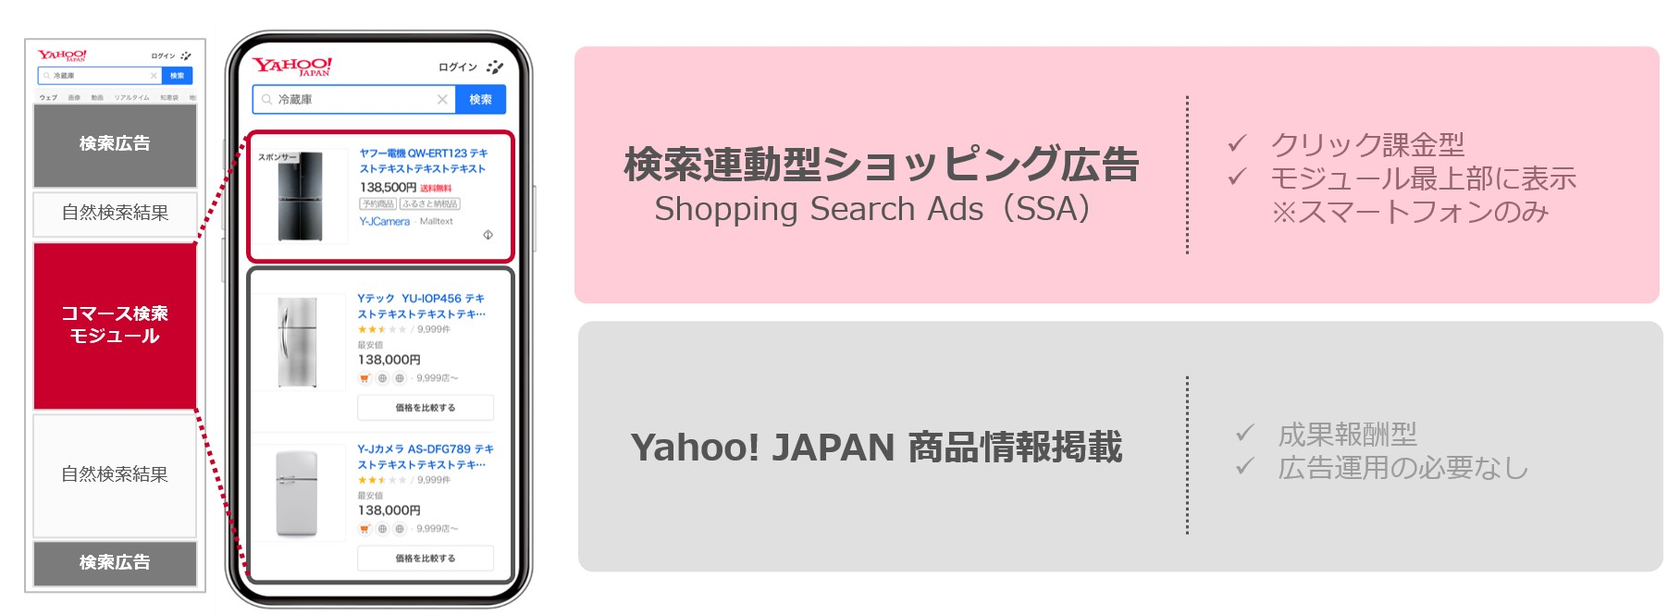 Yahoo!広告【設定手順書】検索連動型ショッピング広告